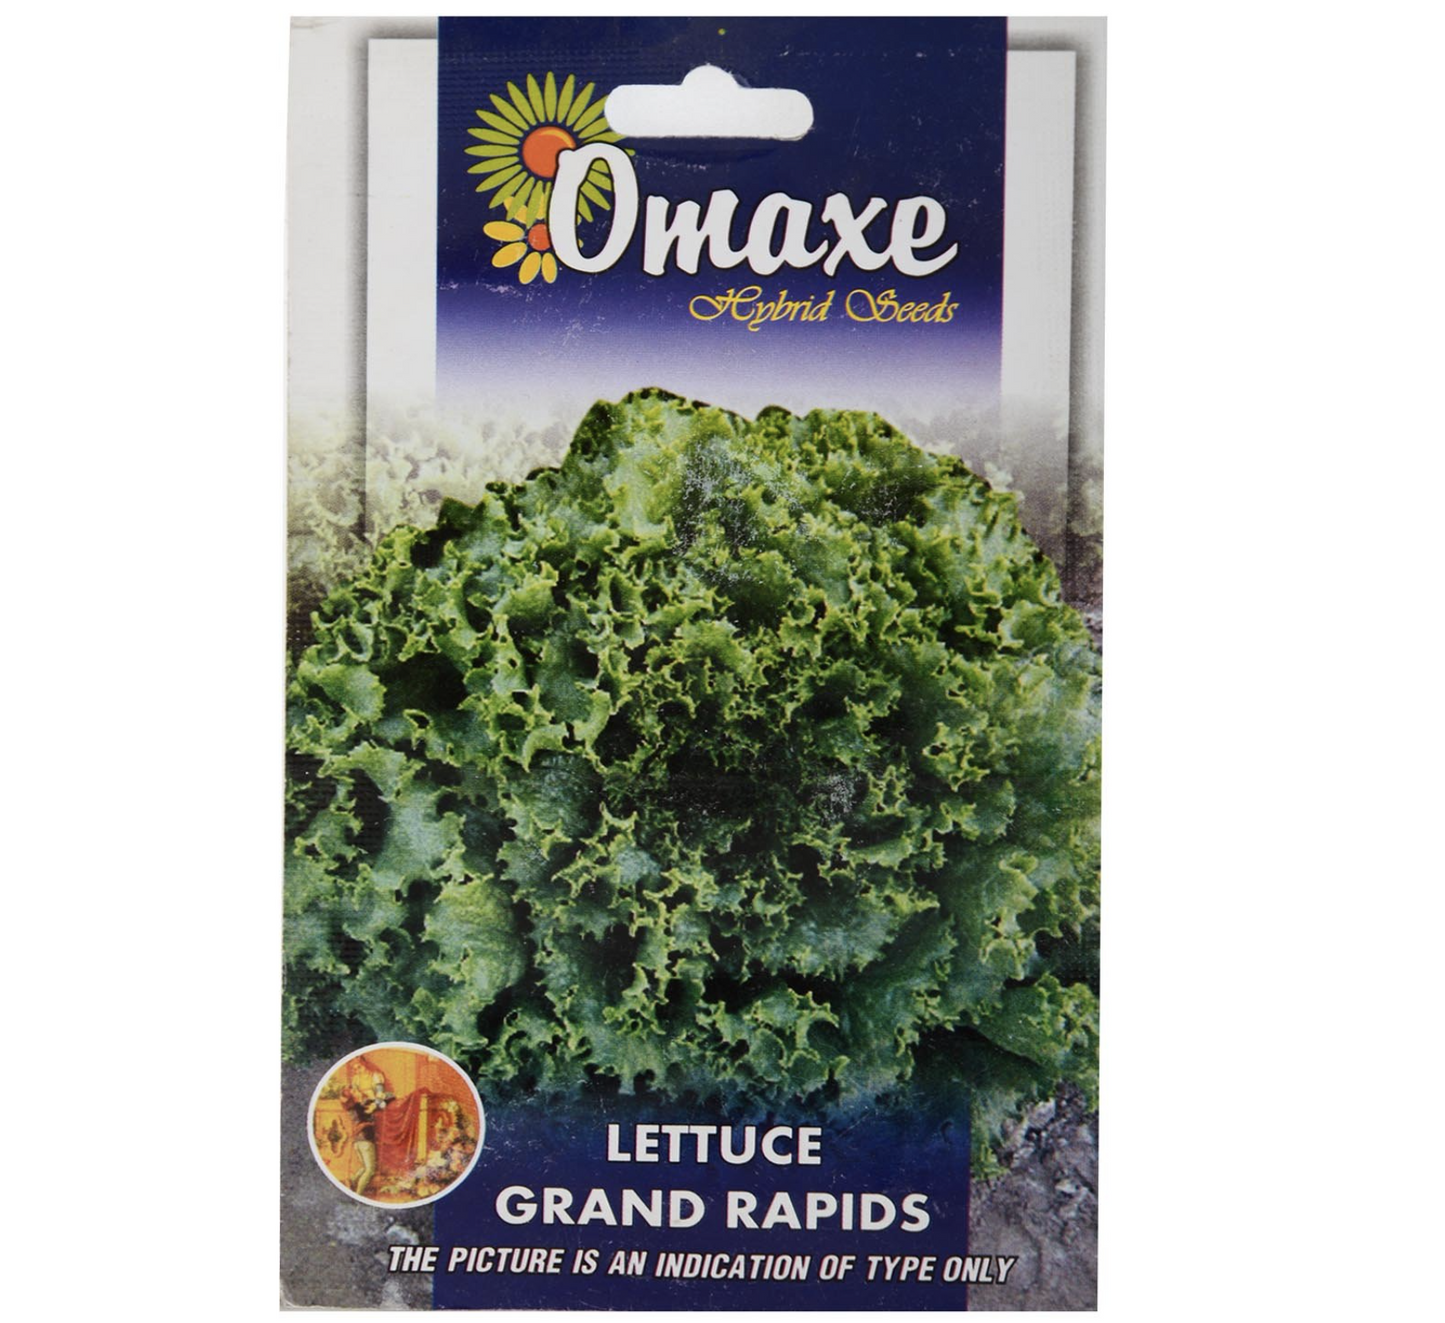 Lettuce Grand Rapids Hybrid Seeds by Omaxe